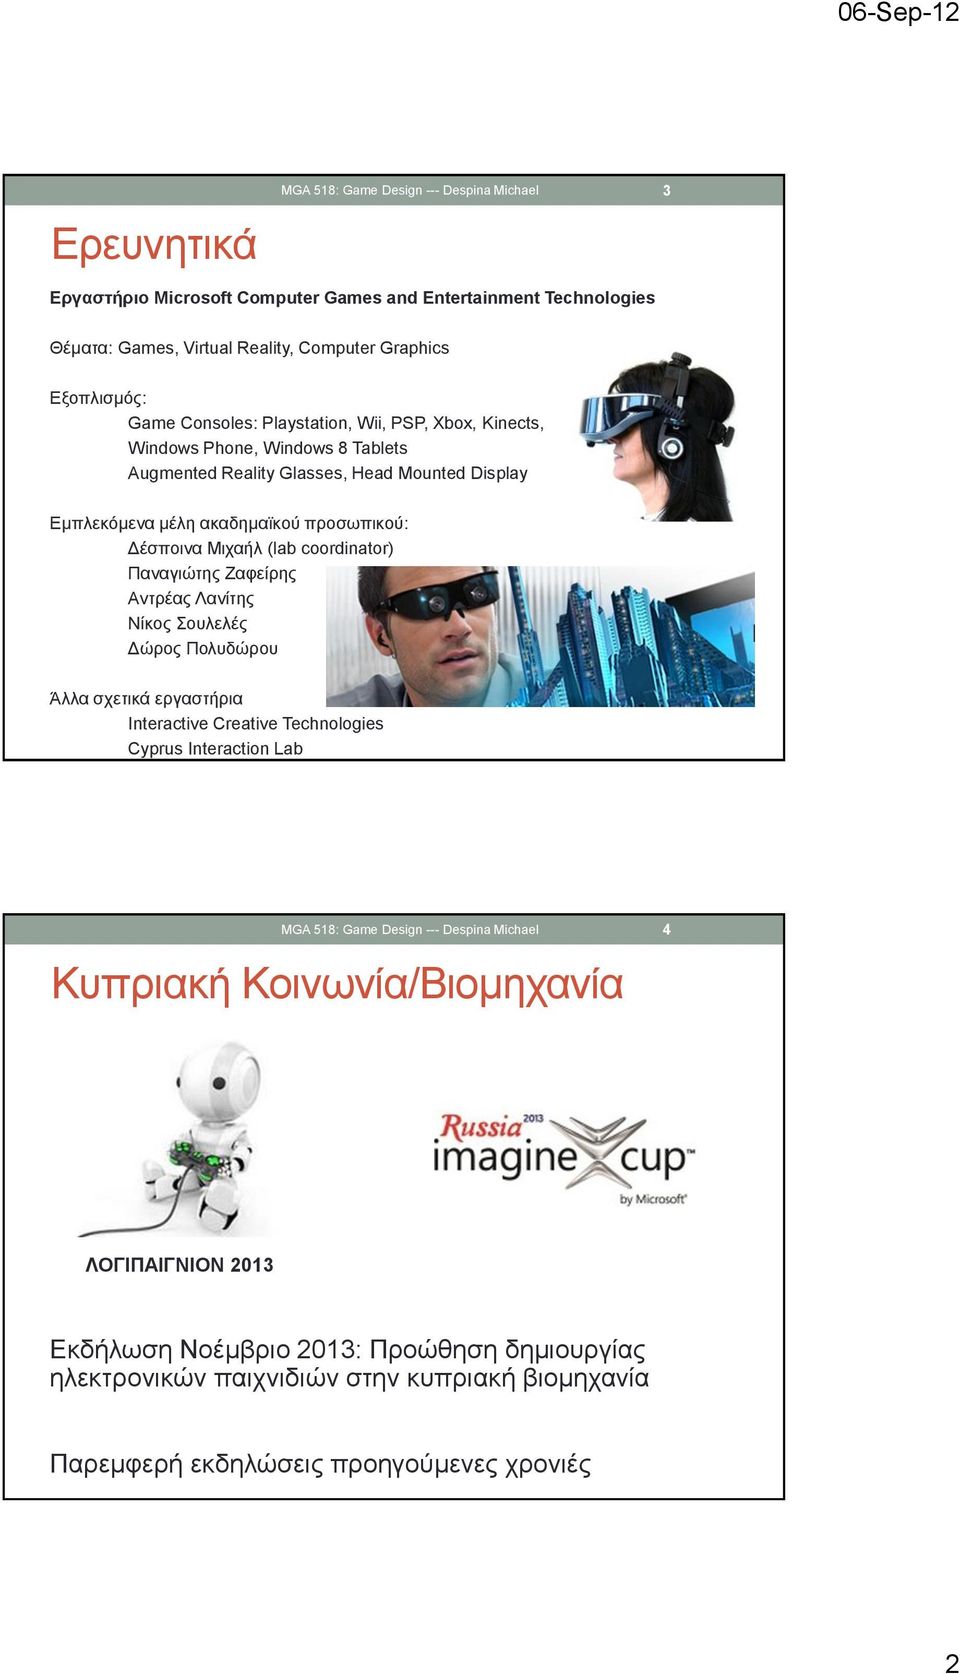 coordinator) Παλαγηώηεο Εαθείξεο Αληξέαο Λαλίηεο Νίθνο νπιειέο Γώξνο Πνιπδώξνπ Άιια ζρεηηθά εξγαζηήξηα Interactive Creative Technologies Cyprus Interaction Lab Κππξηαθή